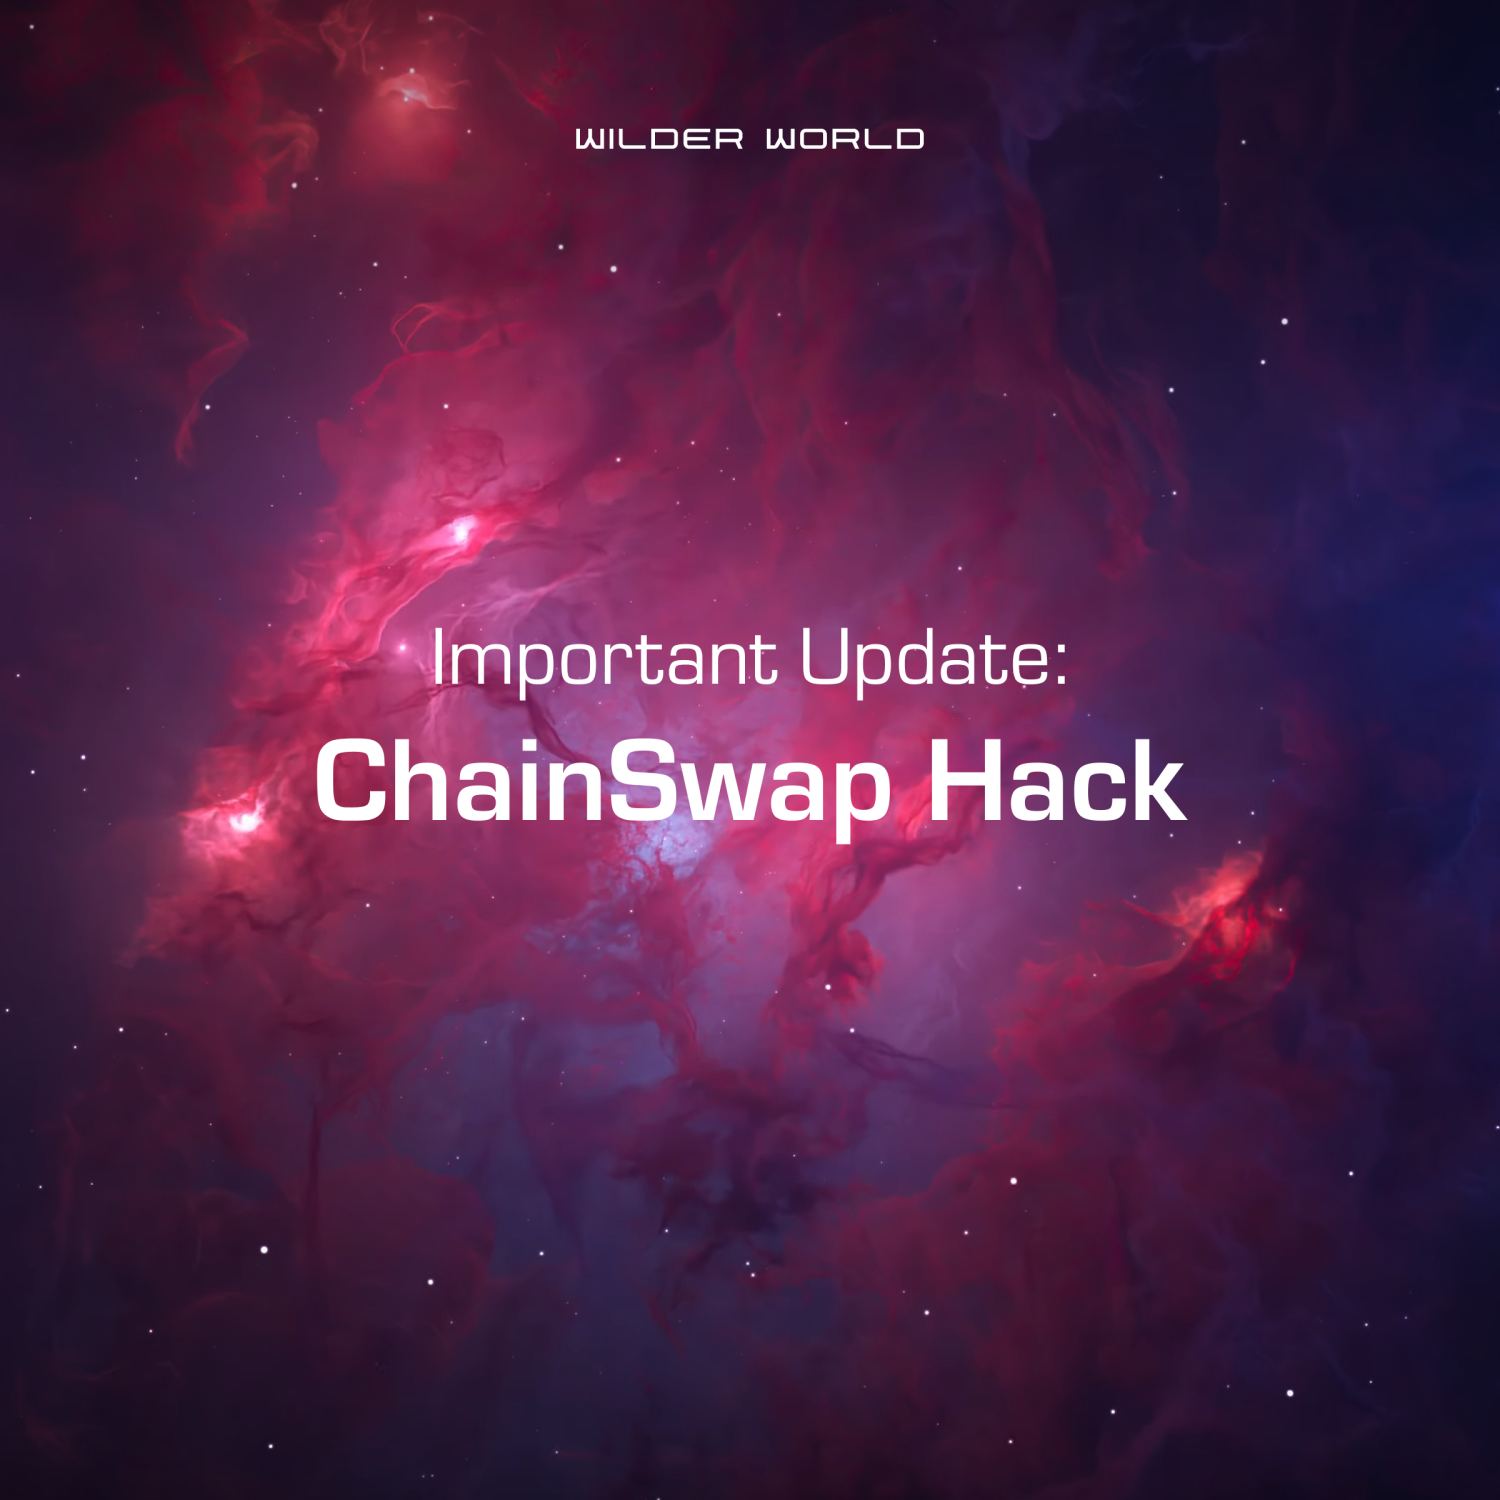 Important Update: ChainSwap Hack